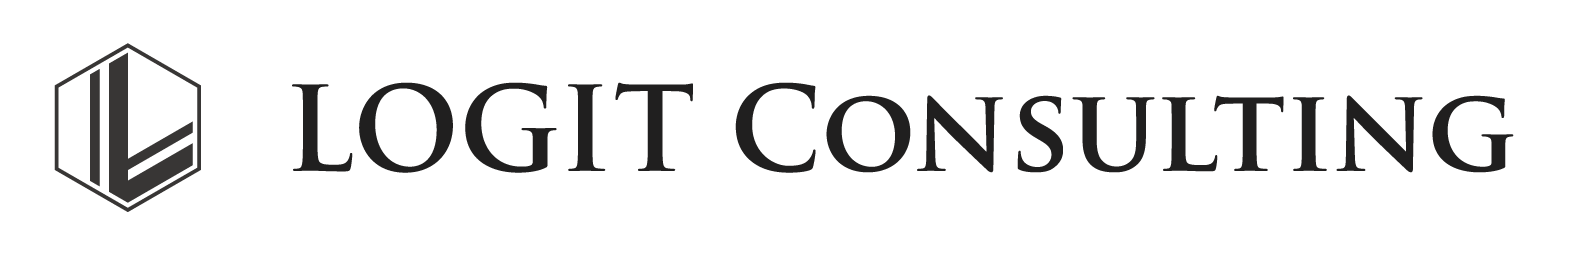 consulting_logo